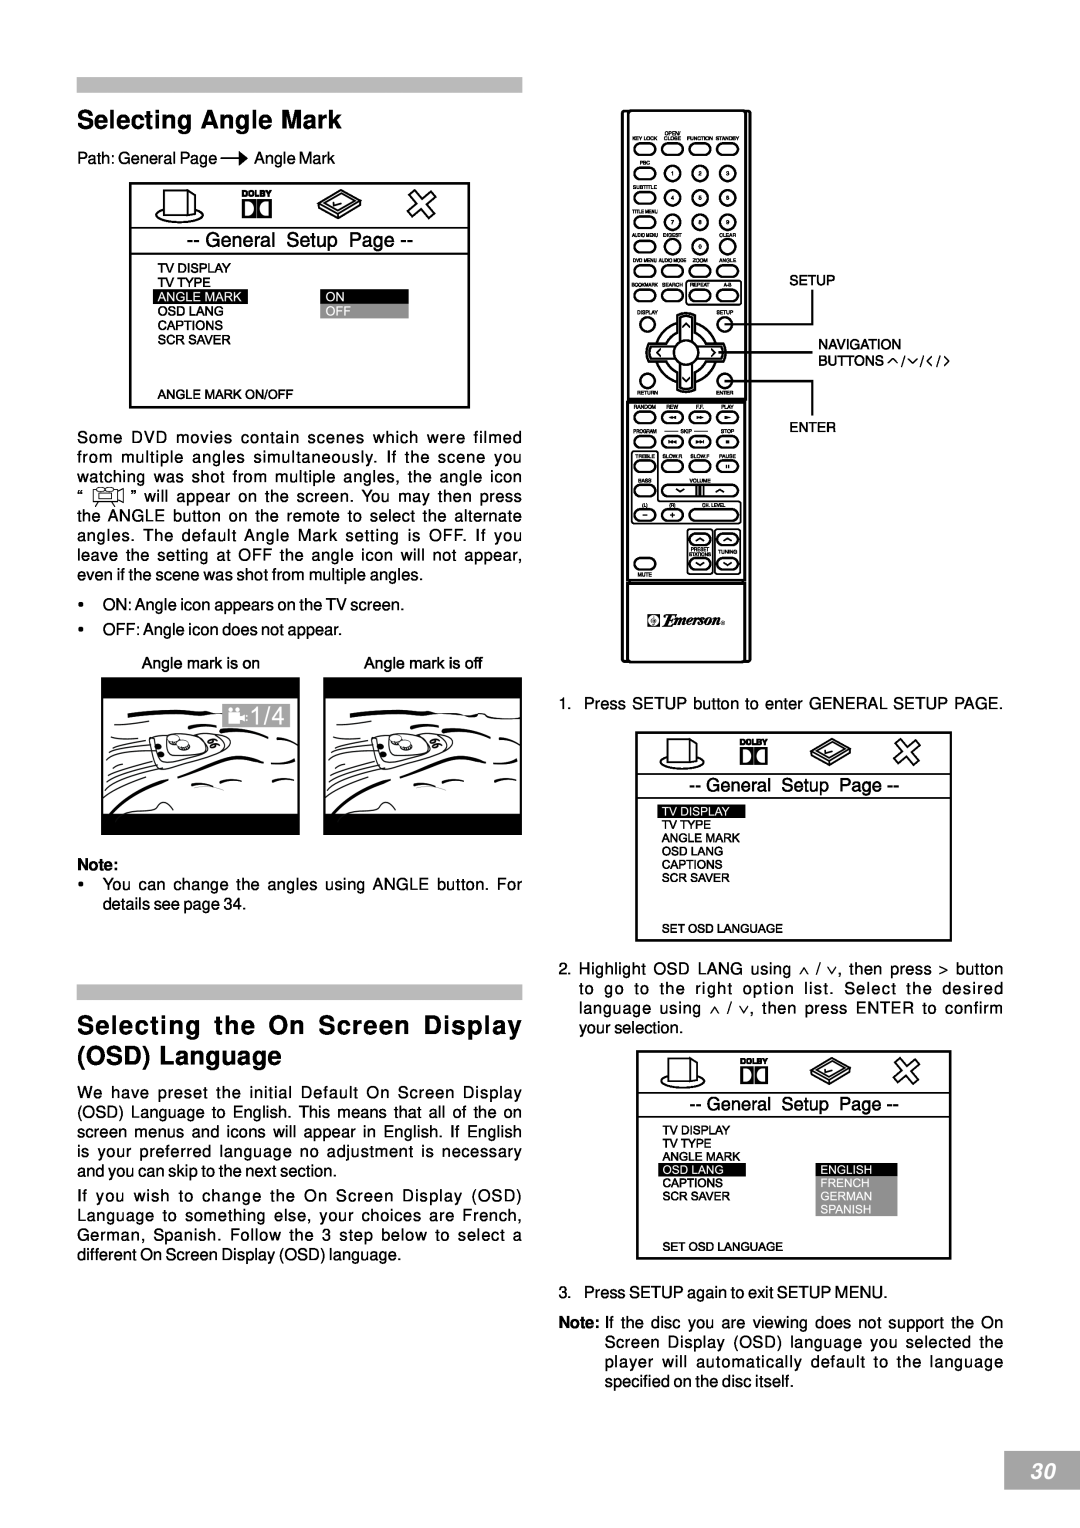 Emerson AV50 owner manual Selecting Angle Mark, Selecting the On Screen Display OSD Language 